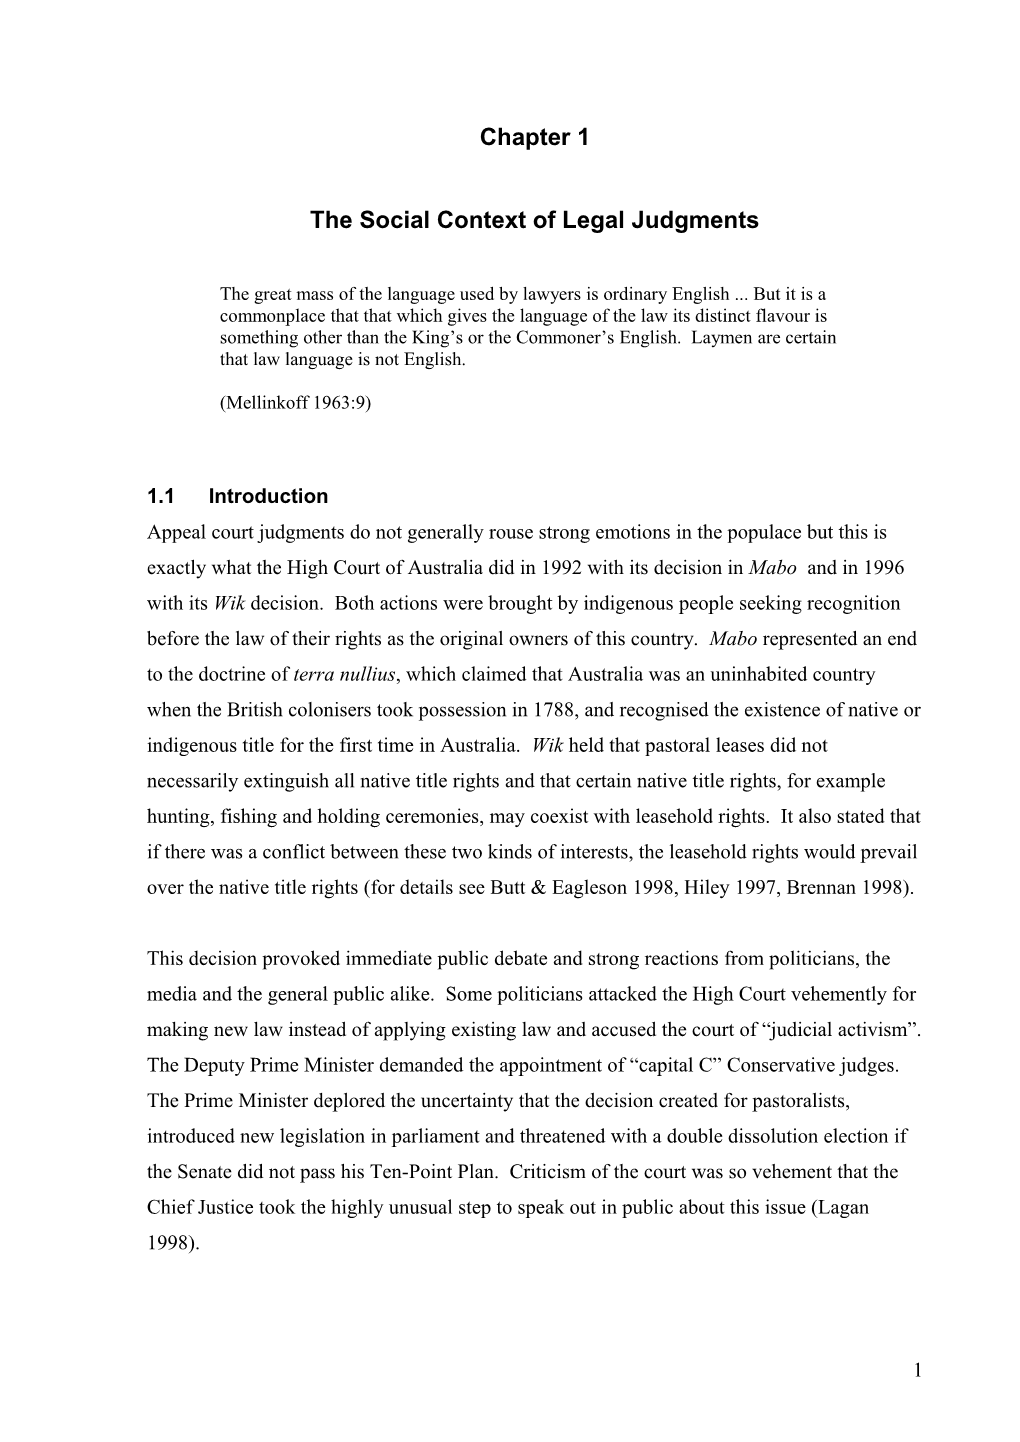 The Social Context of Legal Judgments